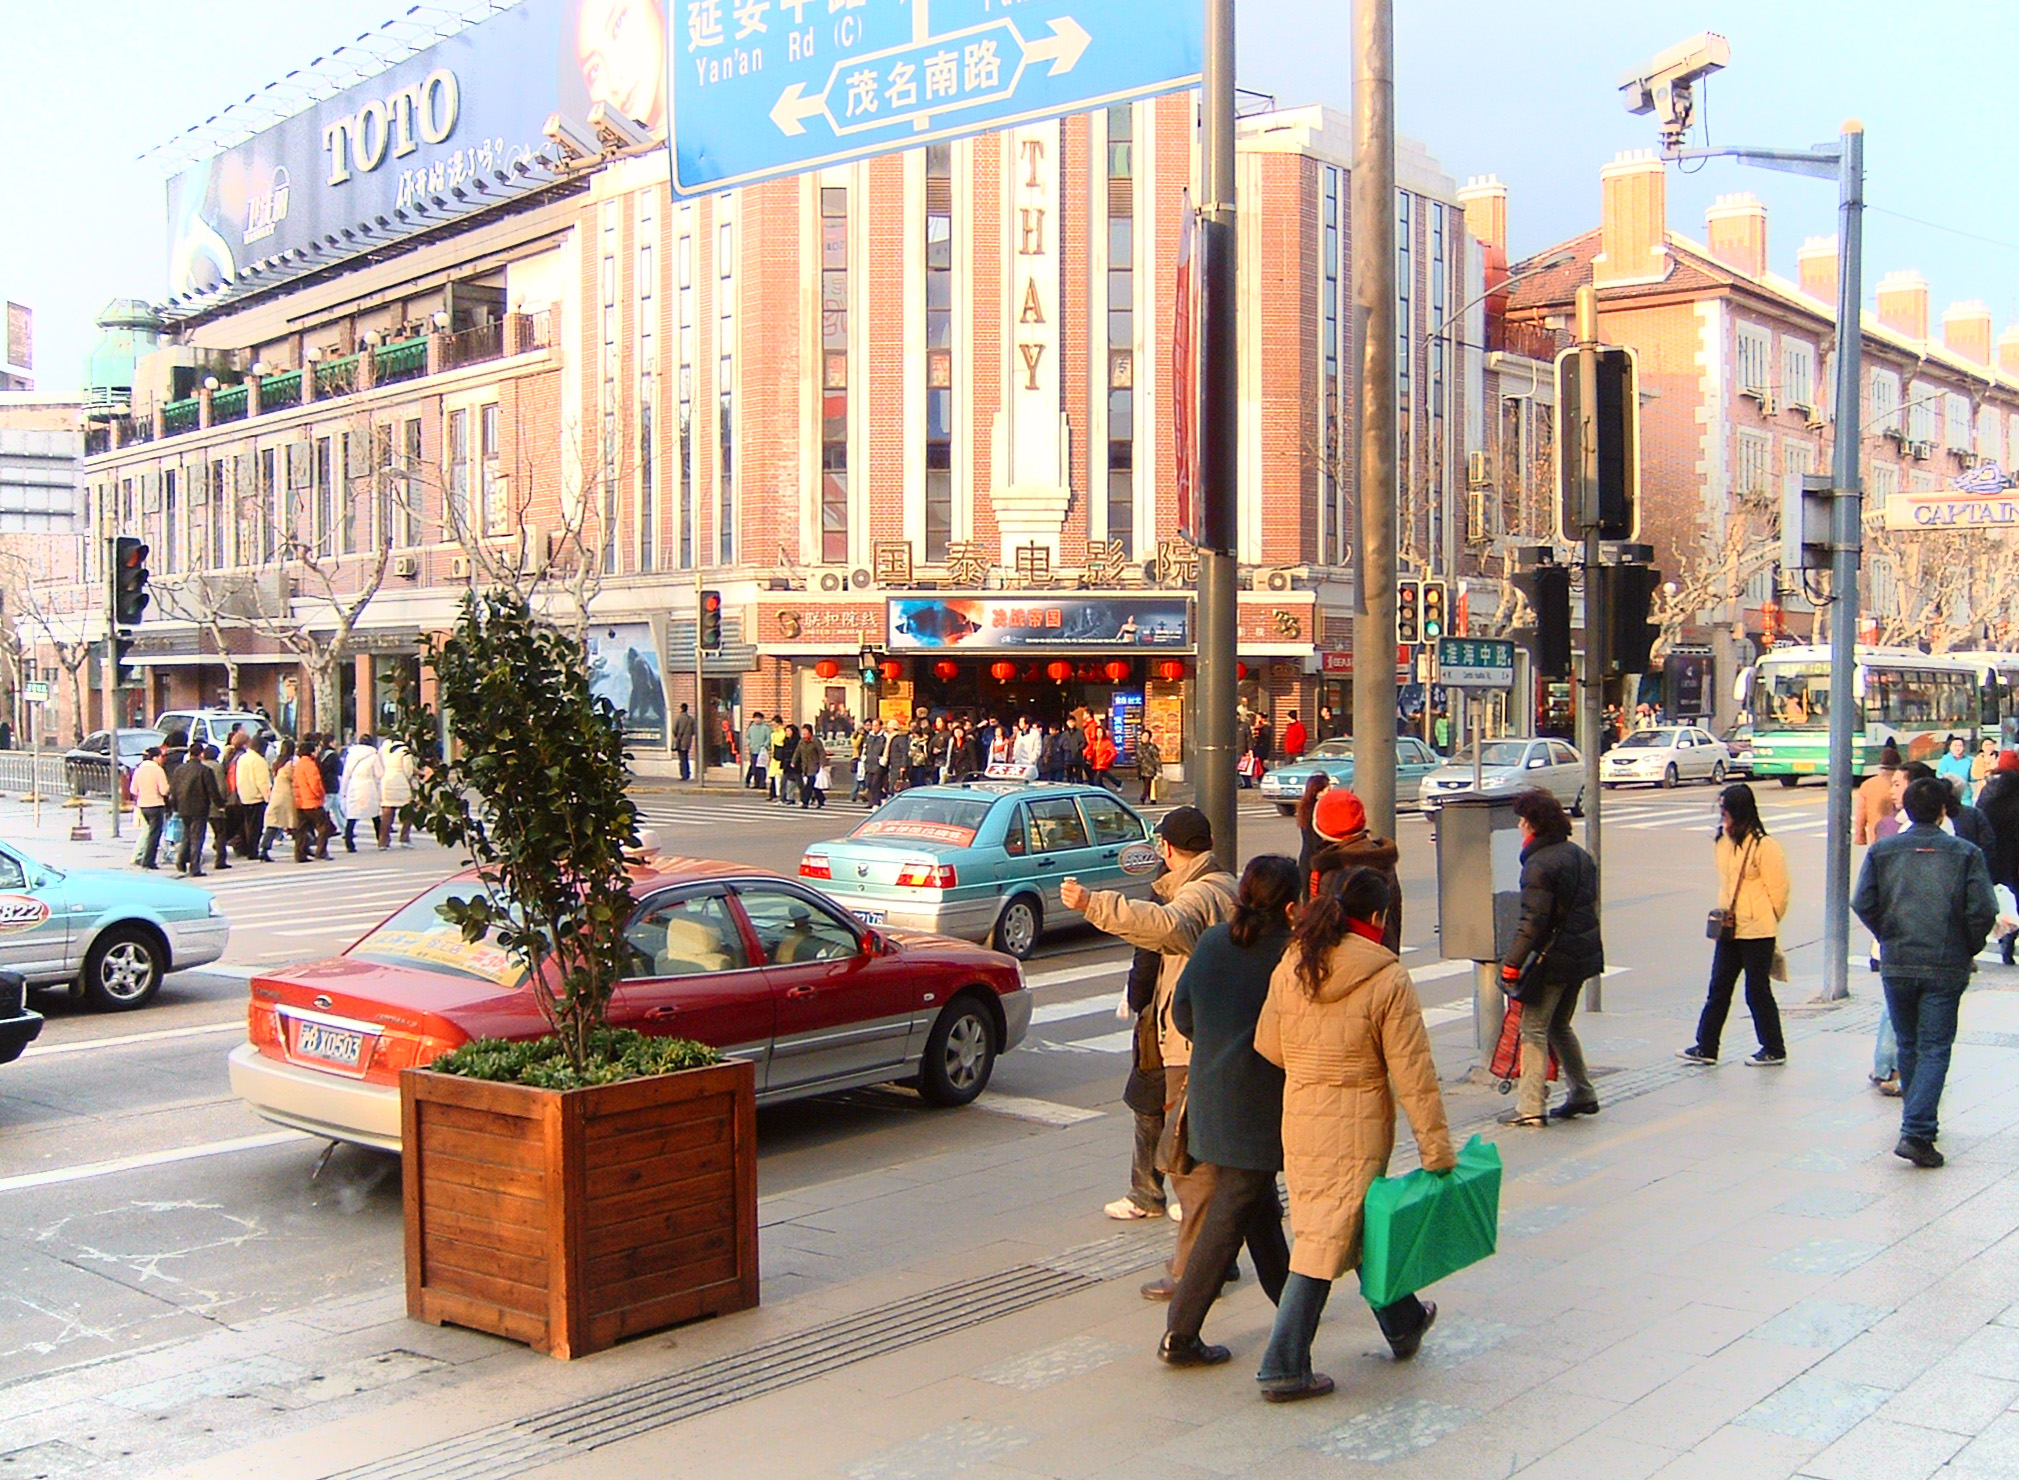 people walk and talk on the sidewalk near a busy street